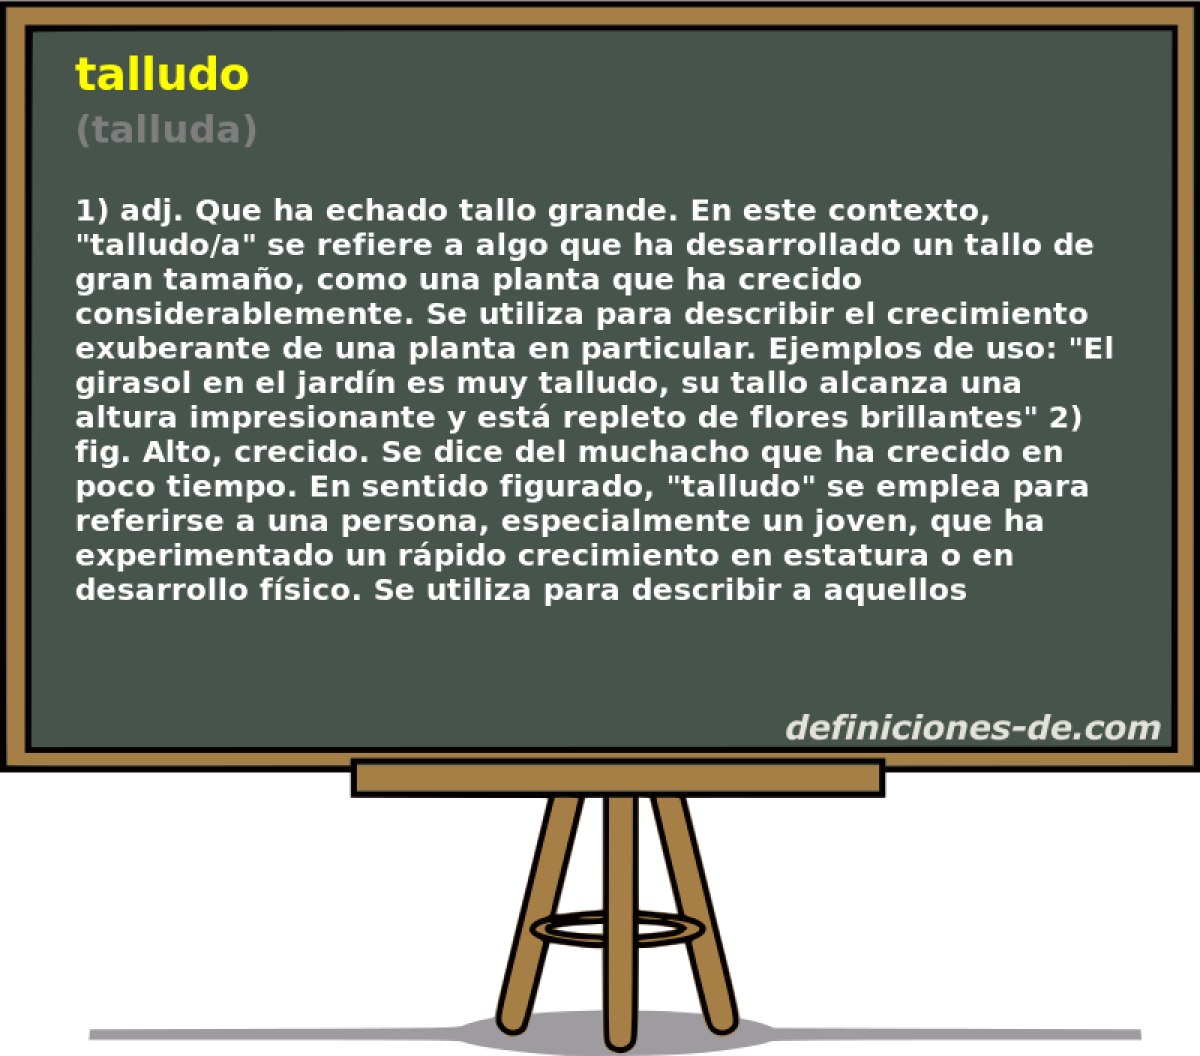 talludo (talluda)